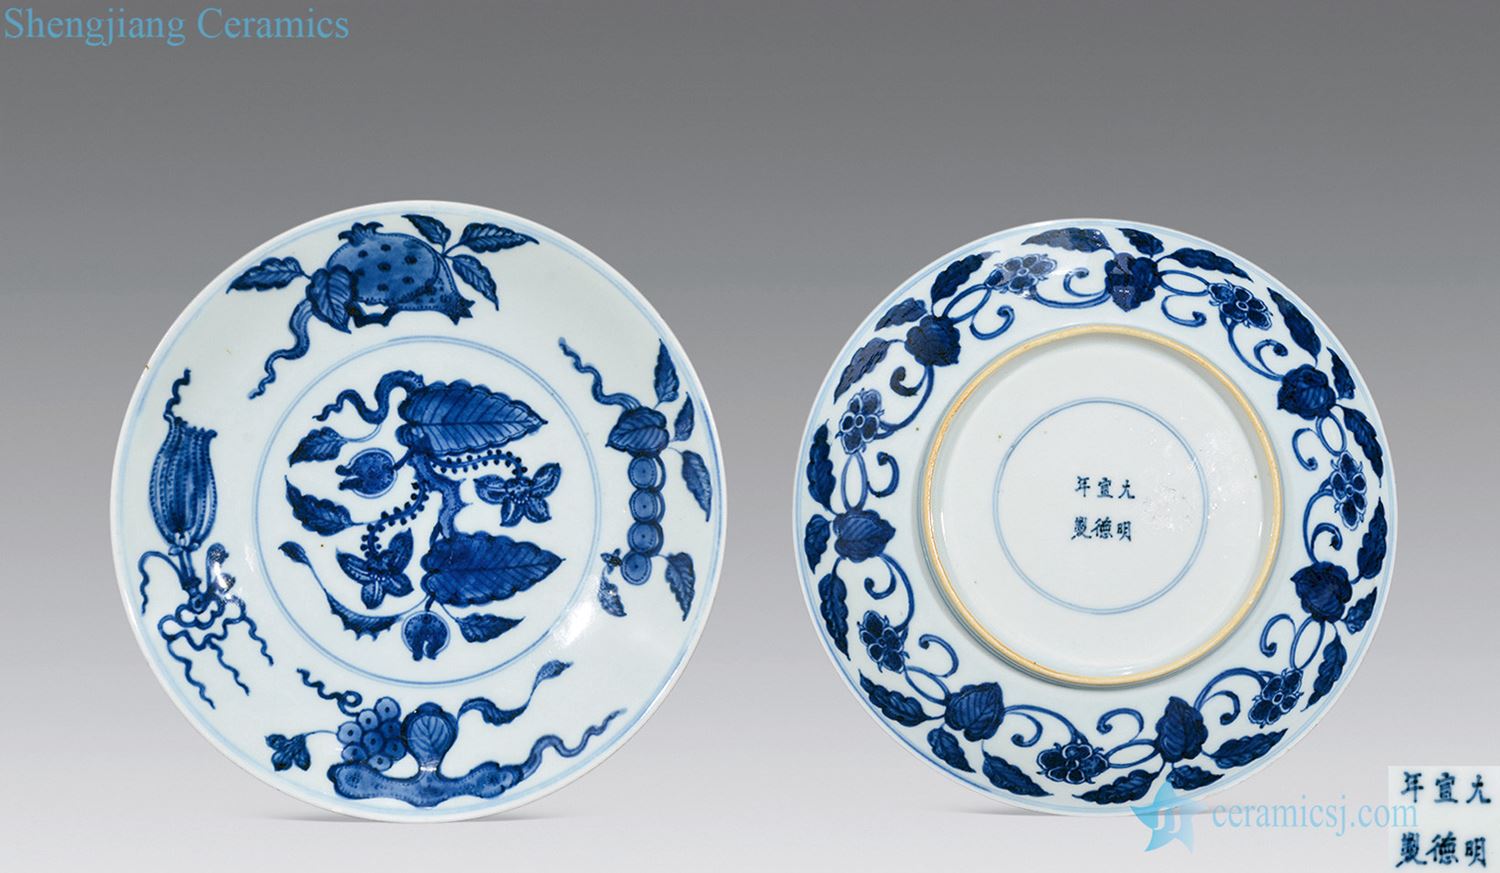 The qing emperor kangxi porcelain imitation jintong fruit tray (a)